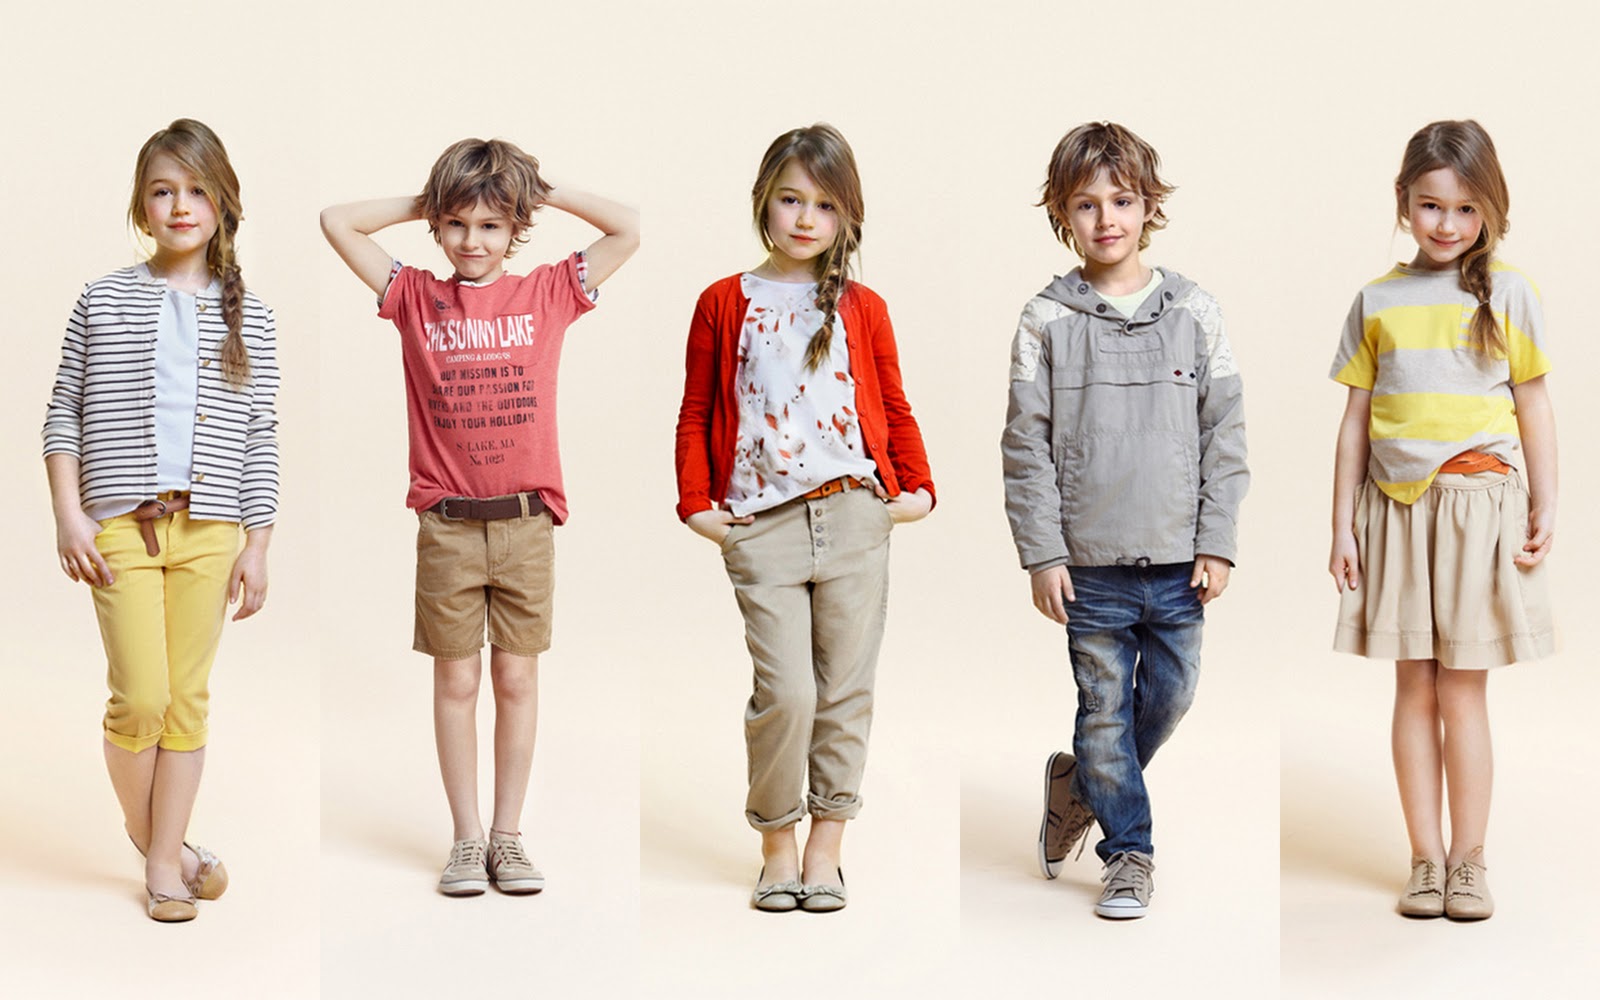 kinh nghiệm kinh doanh quần áo trẻ em online